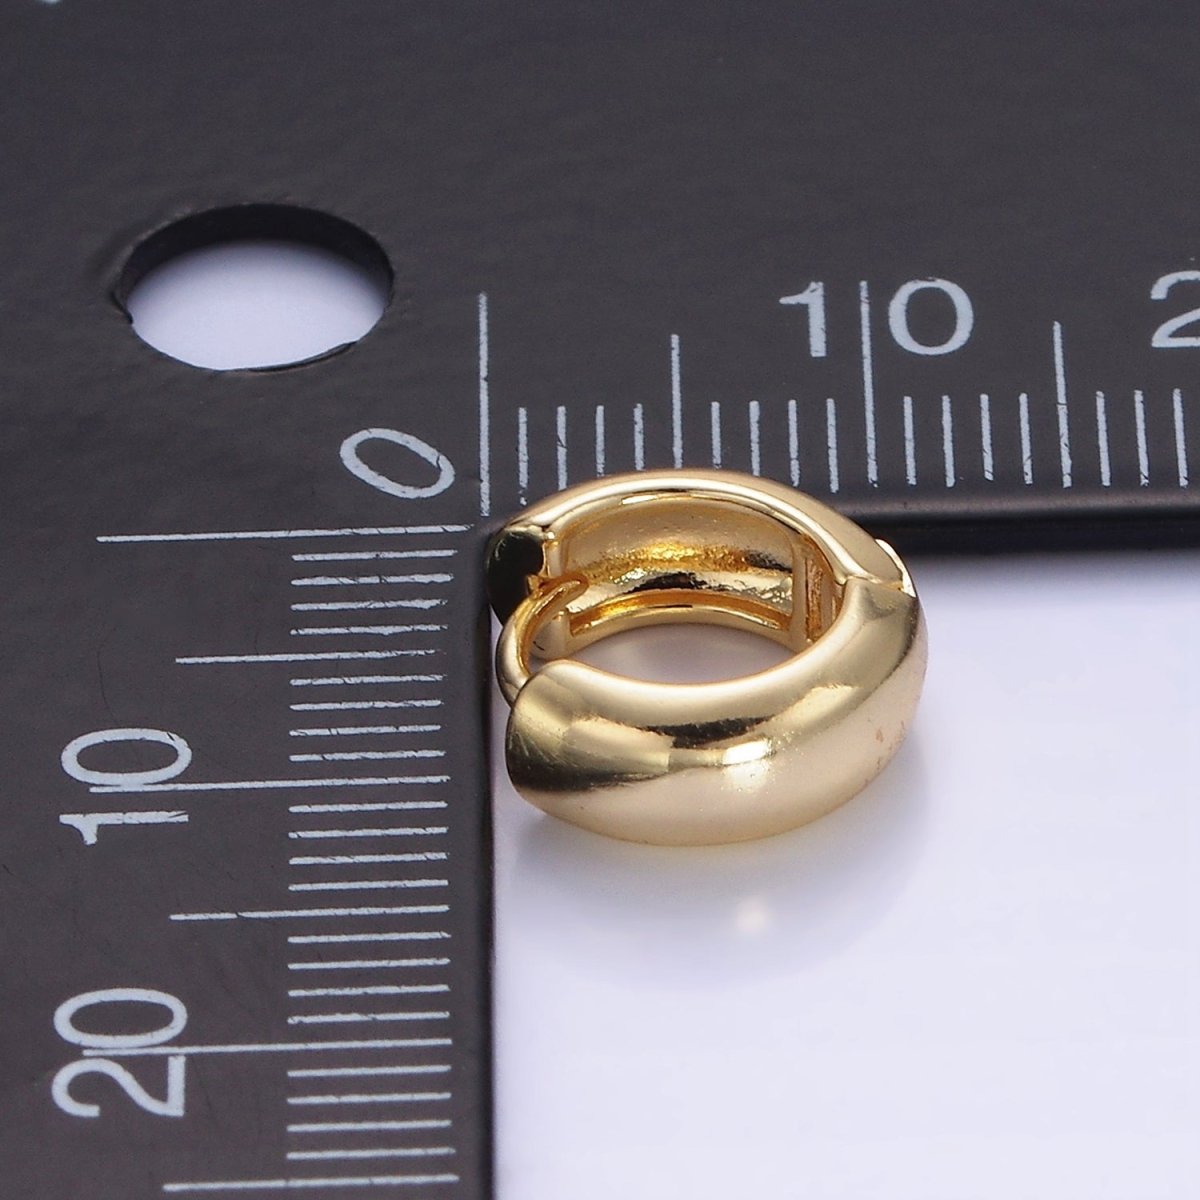 14K Gold Filled 10mm Chubby Minimalist Cartilage Huggie Earrings | P489 - DLUXCA